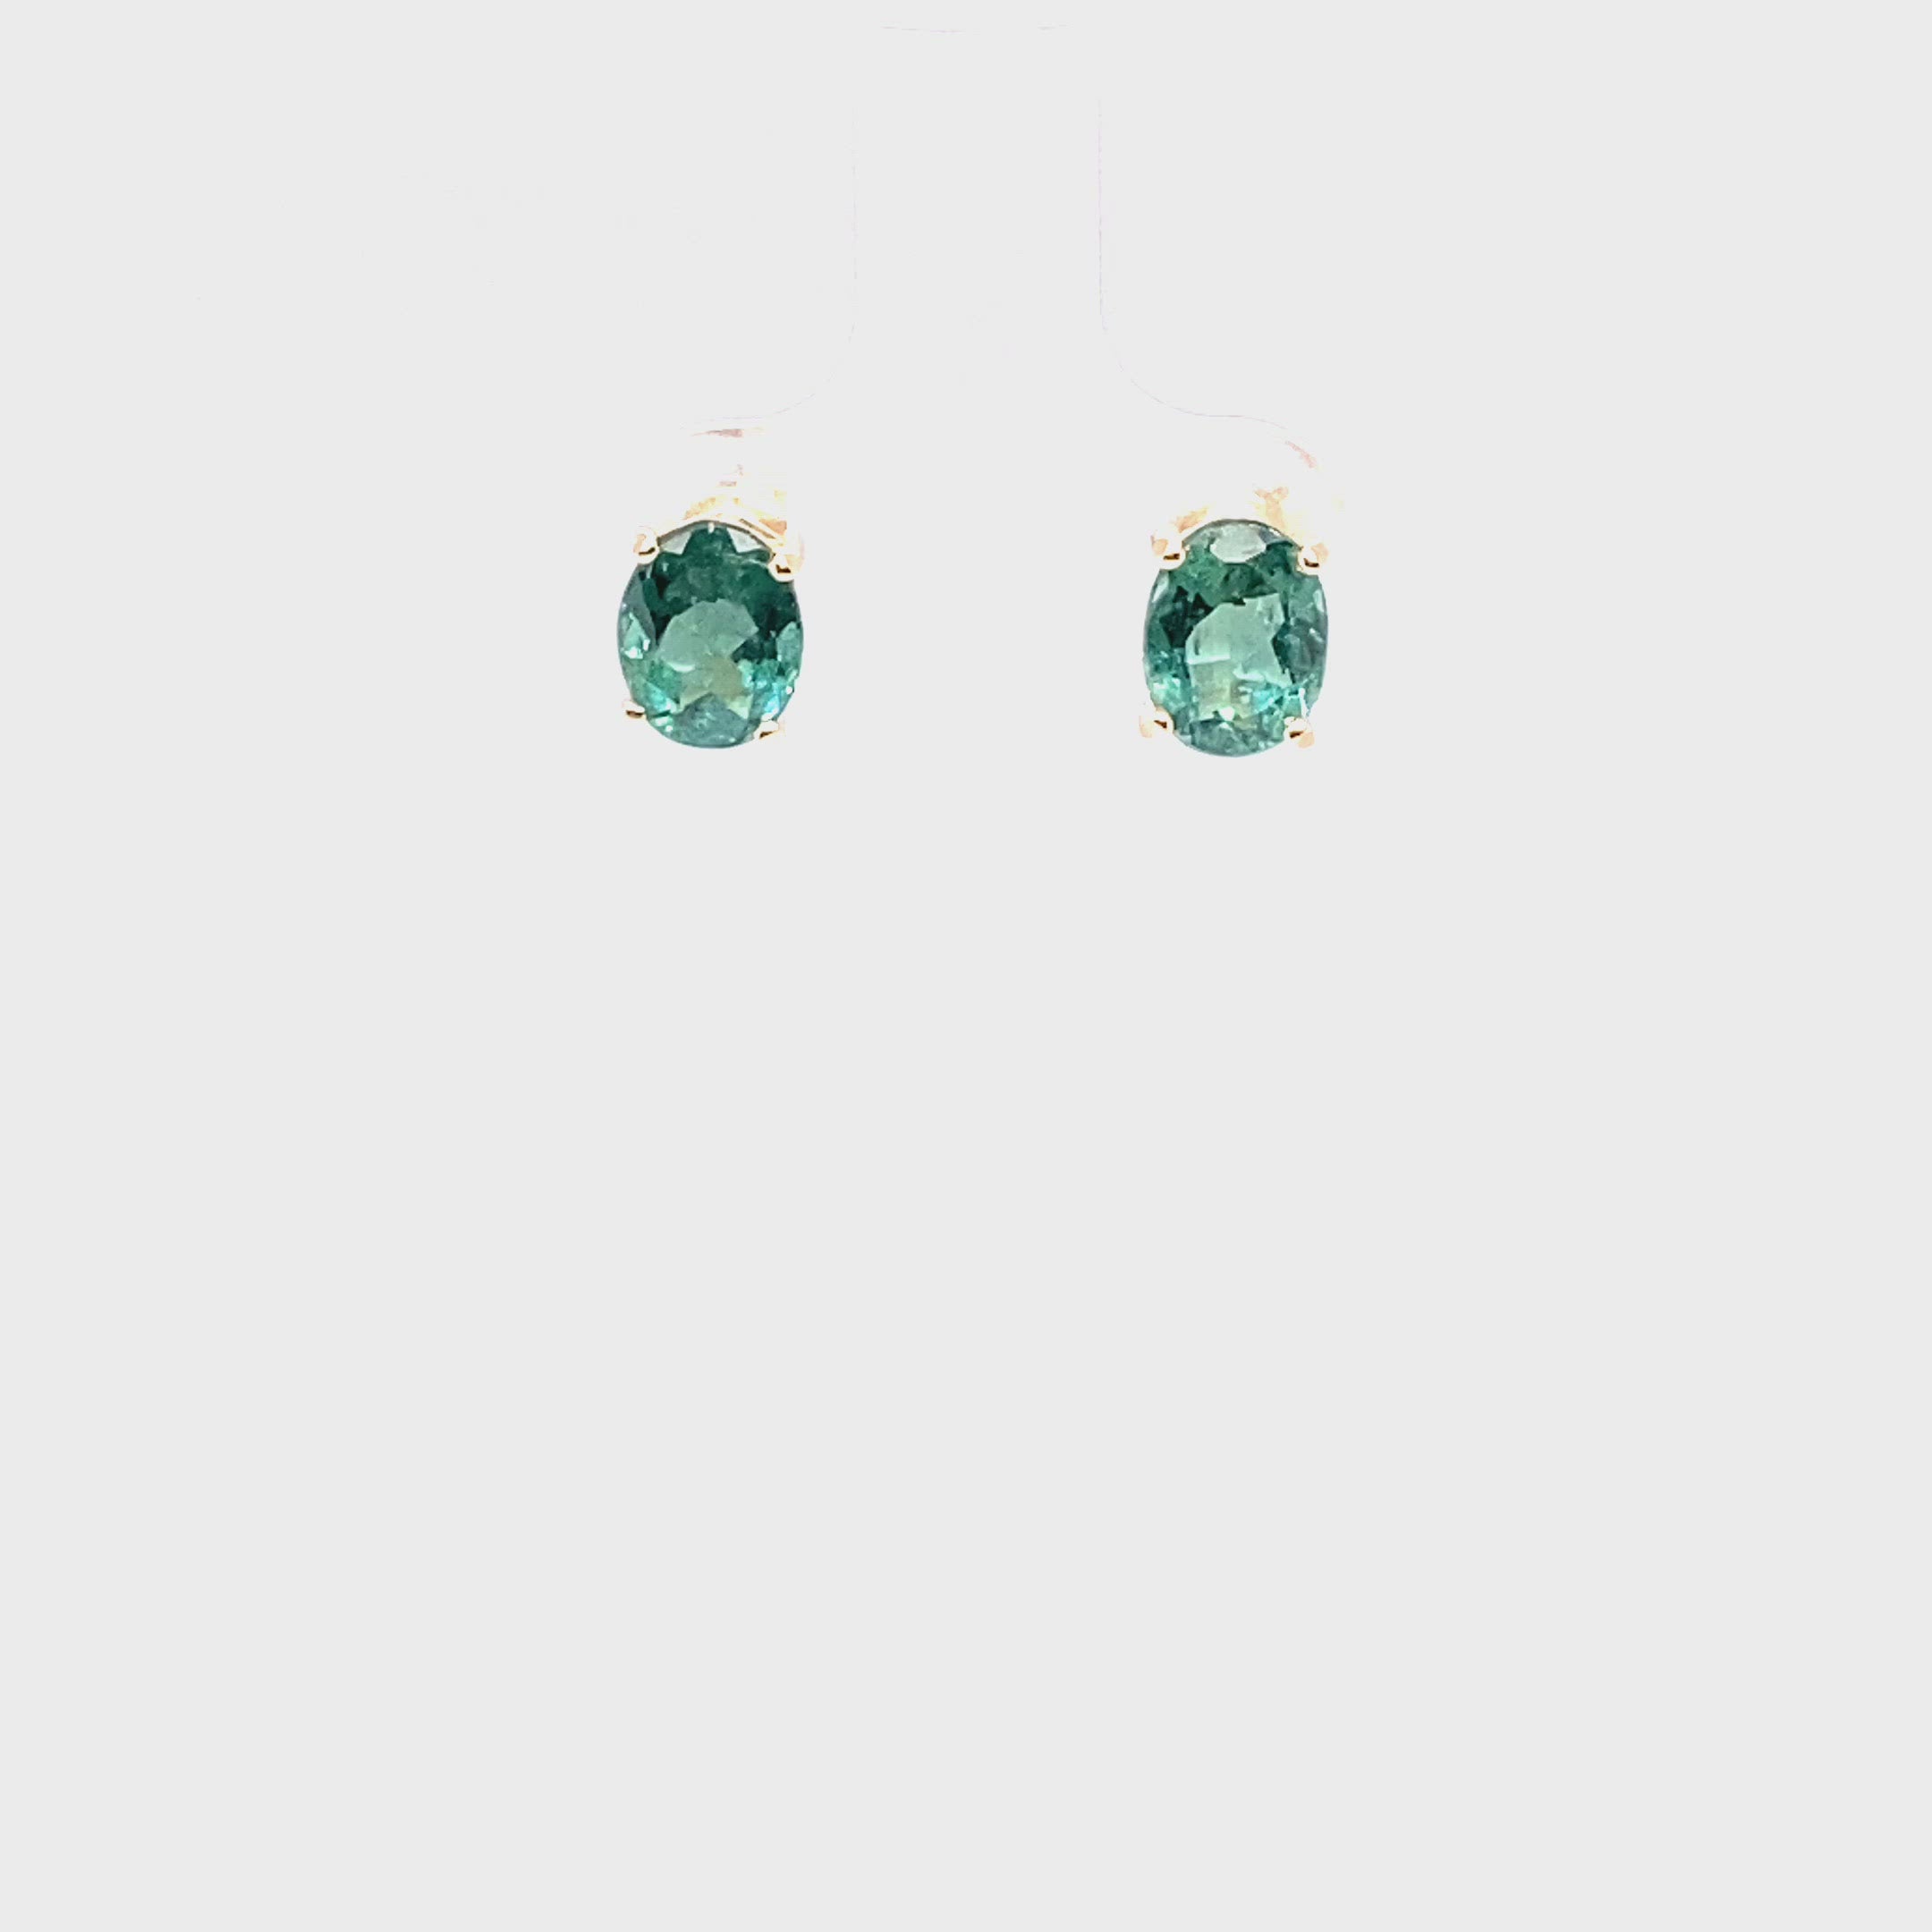 Natural Paraiba Tourmaline Earrings 10K Solid Gold 2.36tcw Gemstone Earrings Solitaire Earrings Stud Earrings Birthstone Statement Earrings